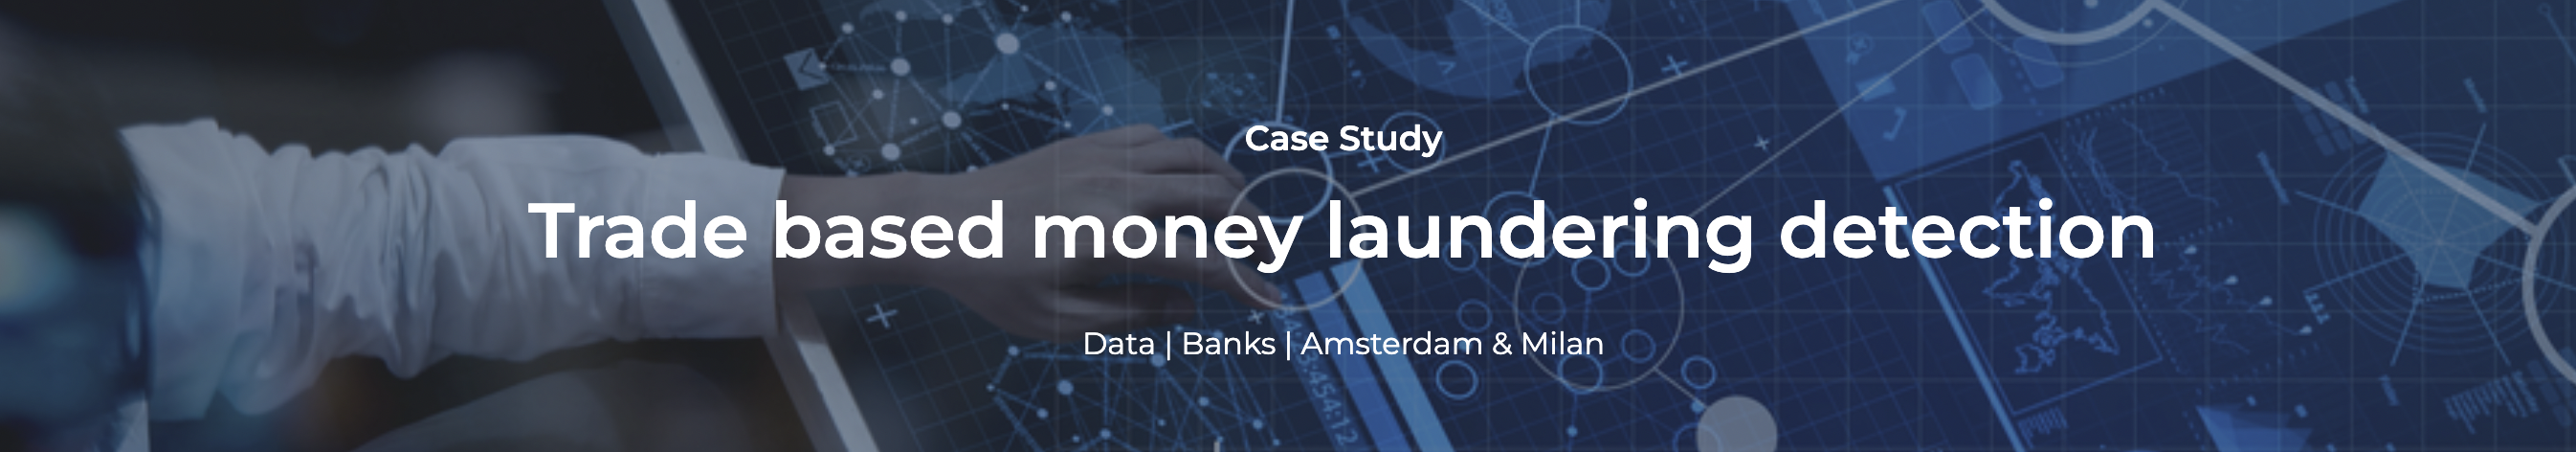 Data & Banks Case Study: Trade based money laundering